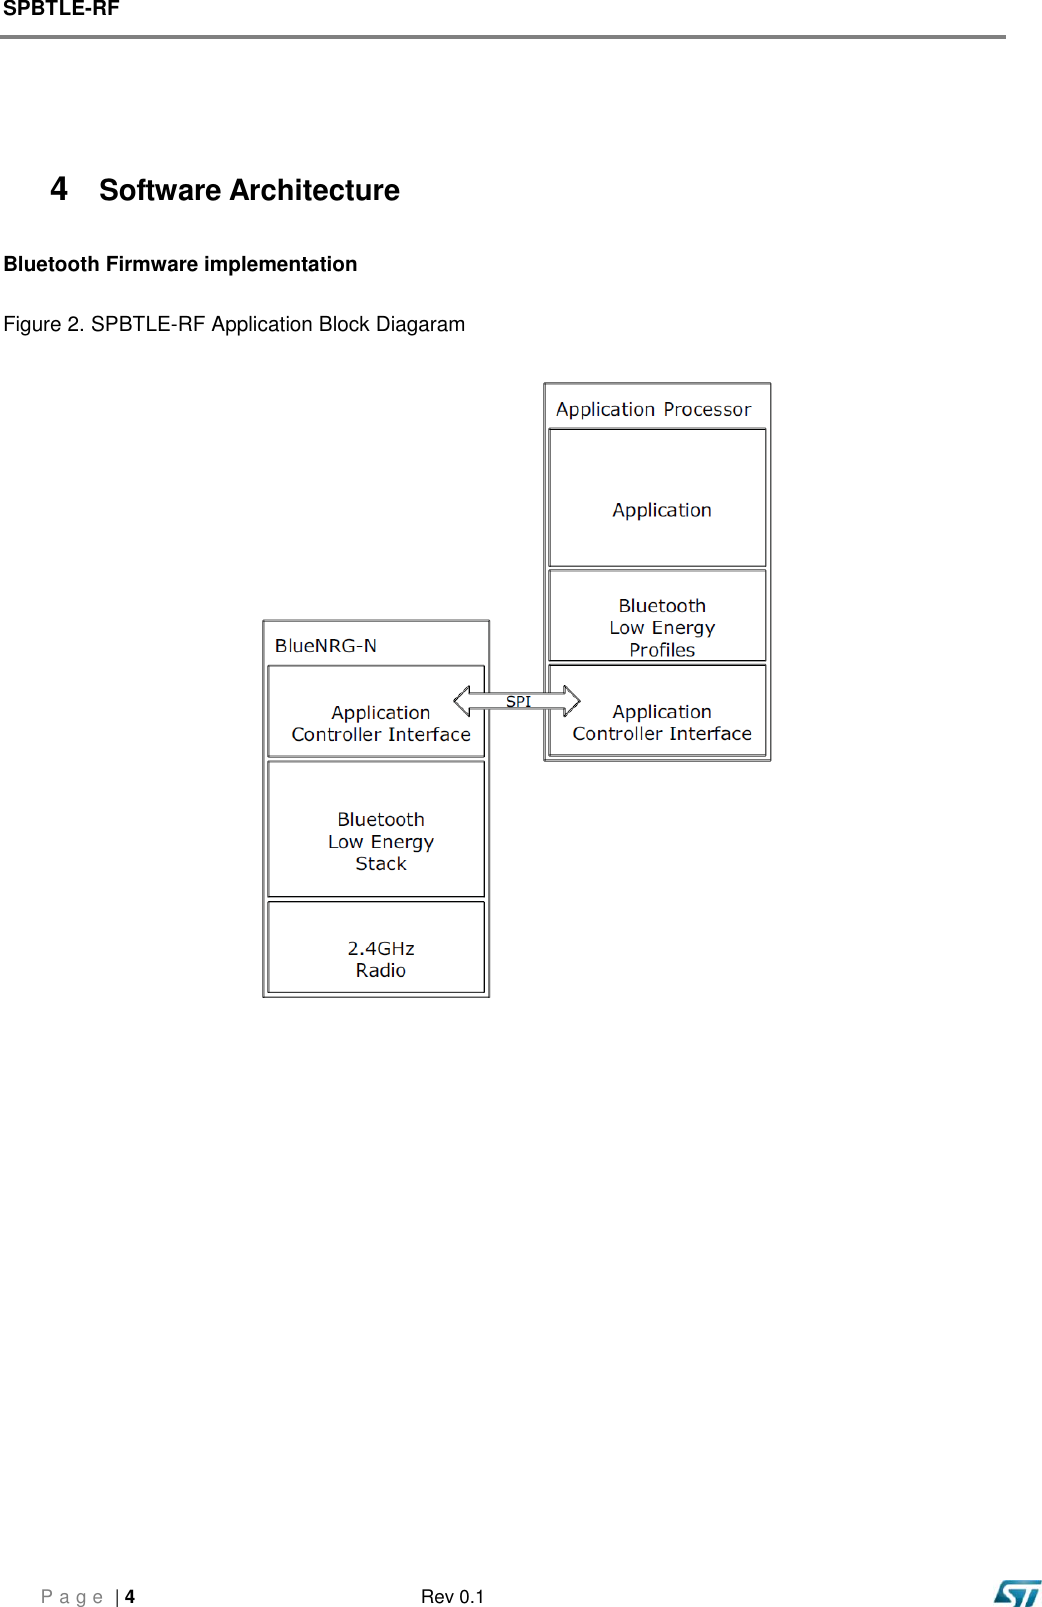 SPBTLE-RF  P a g e  | 4  Rev 0.1     4   Software Architecture  Bluetooth Firmware implementation    Figure 2. SPBTLE-RF Application Block Diagaram          